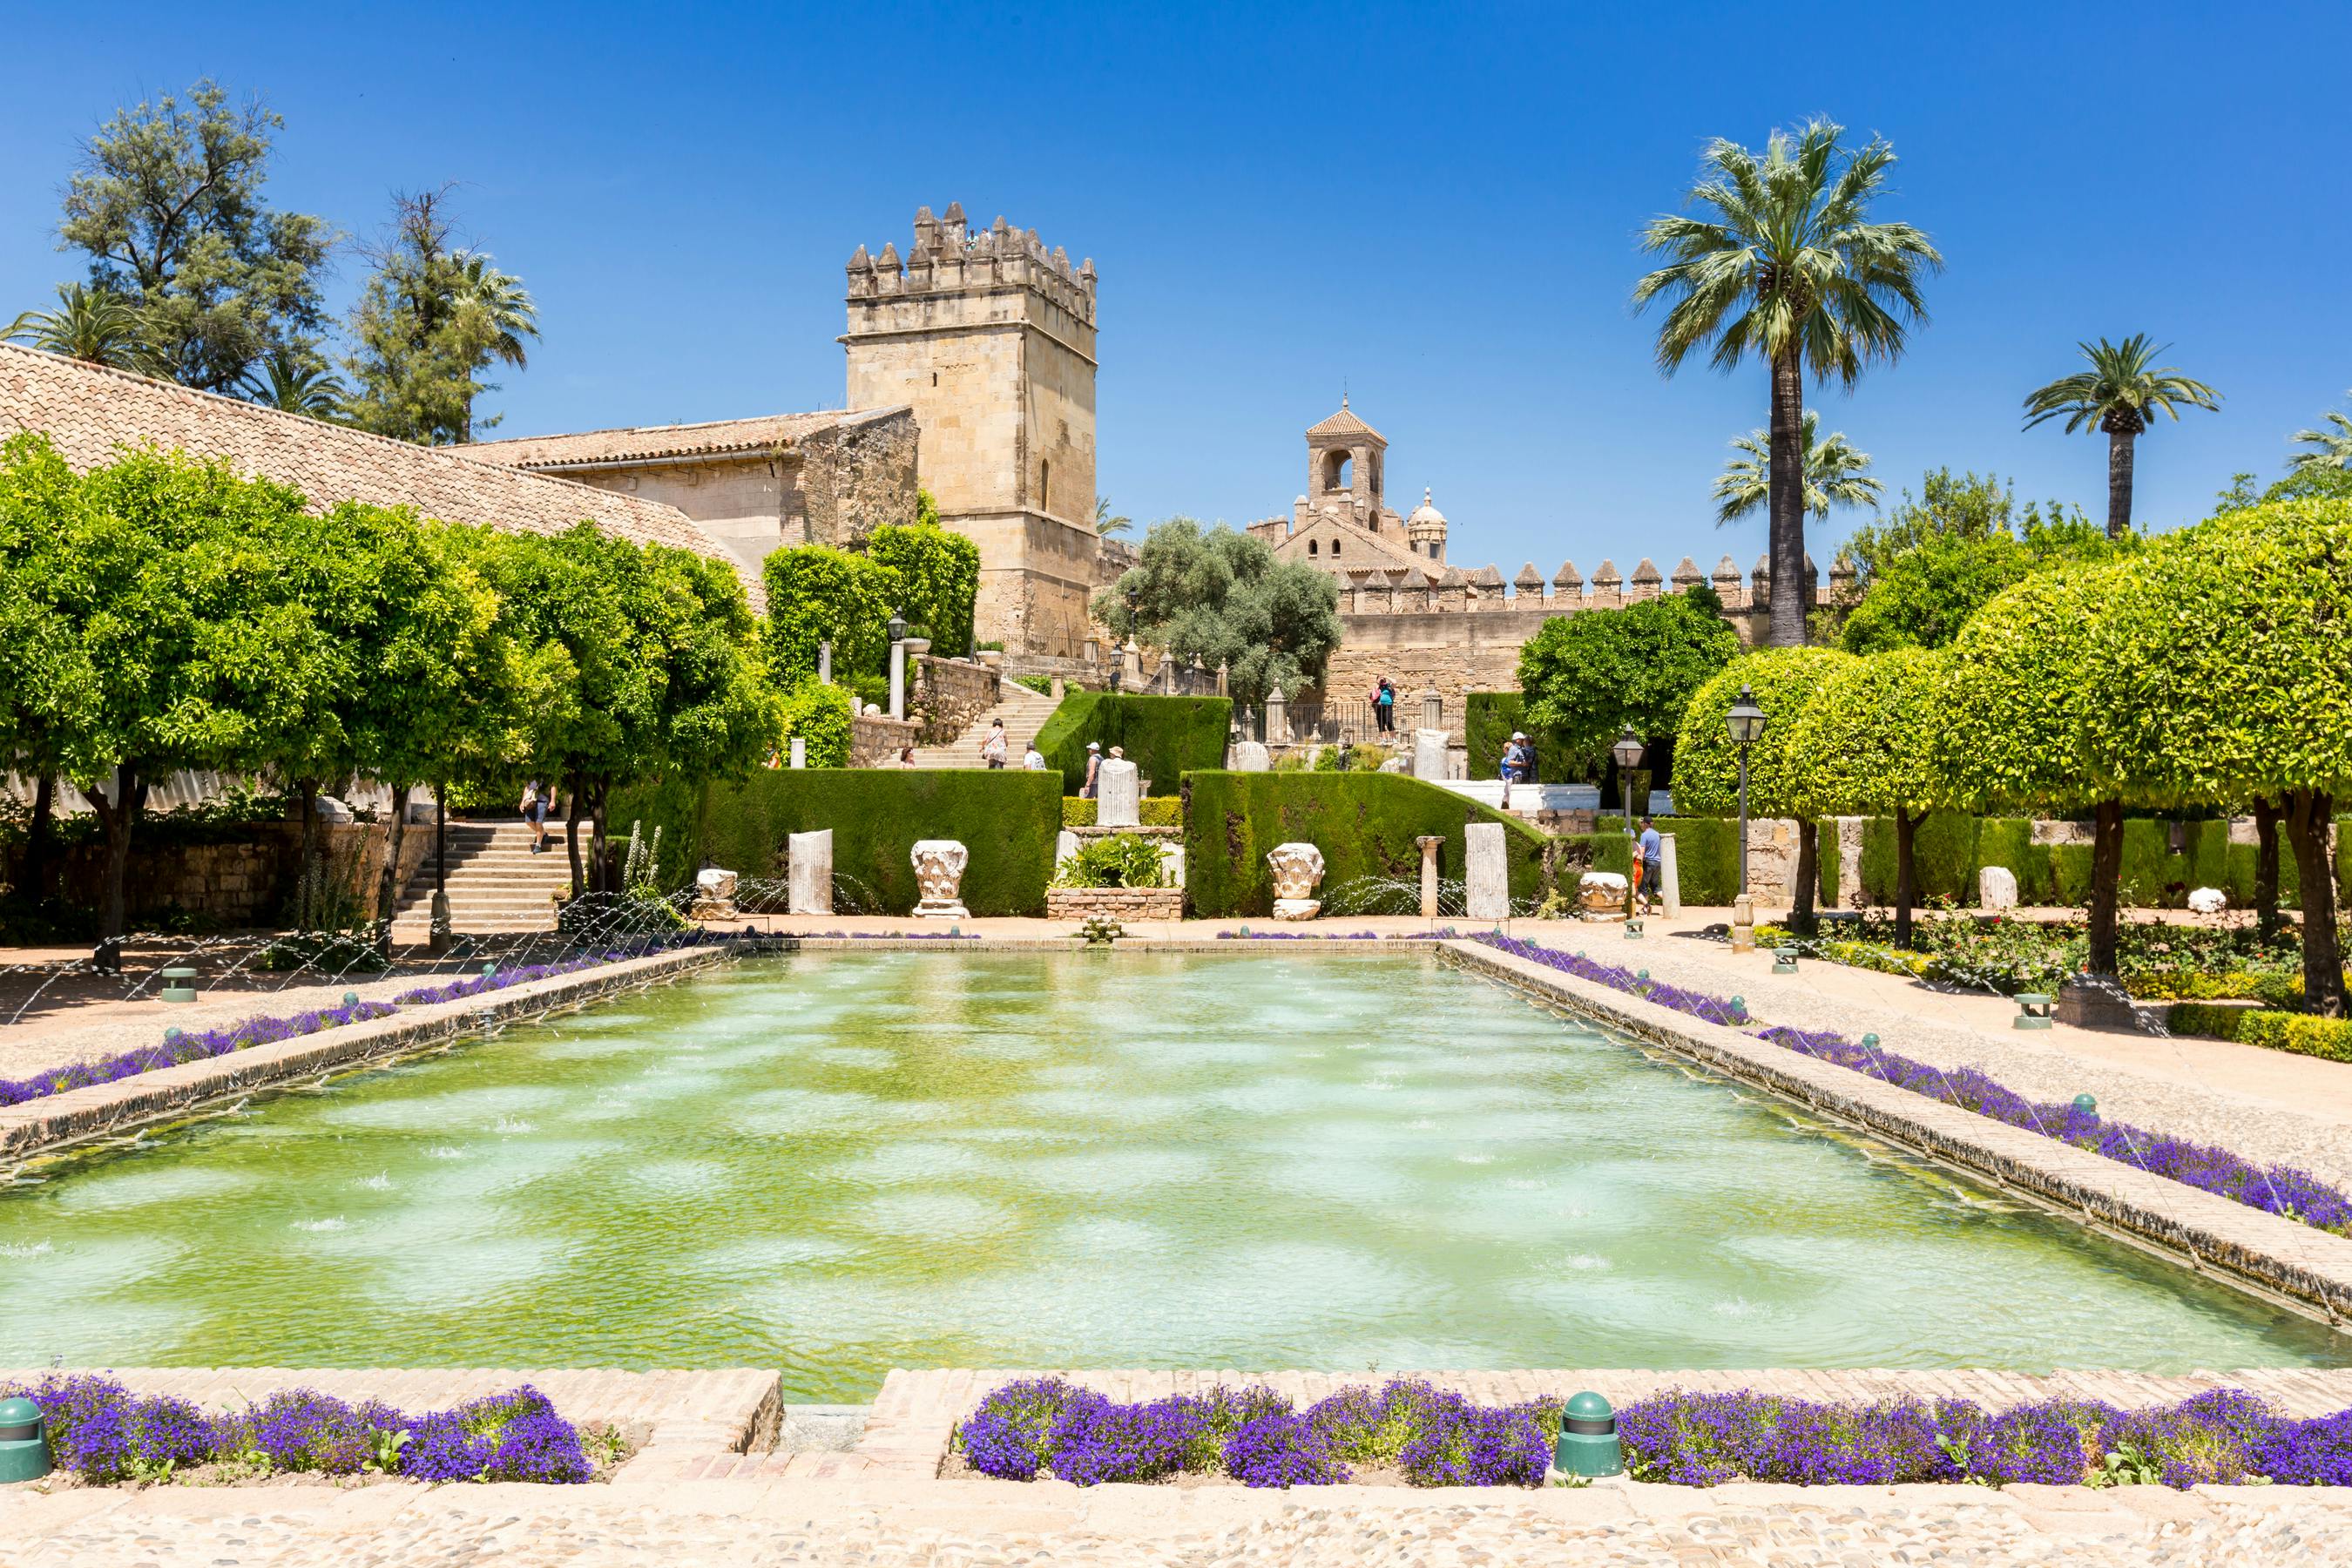 Alcázar de los Reyes Cristianos guided tour